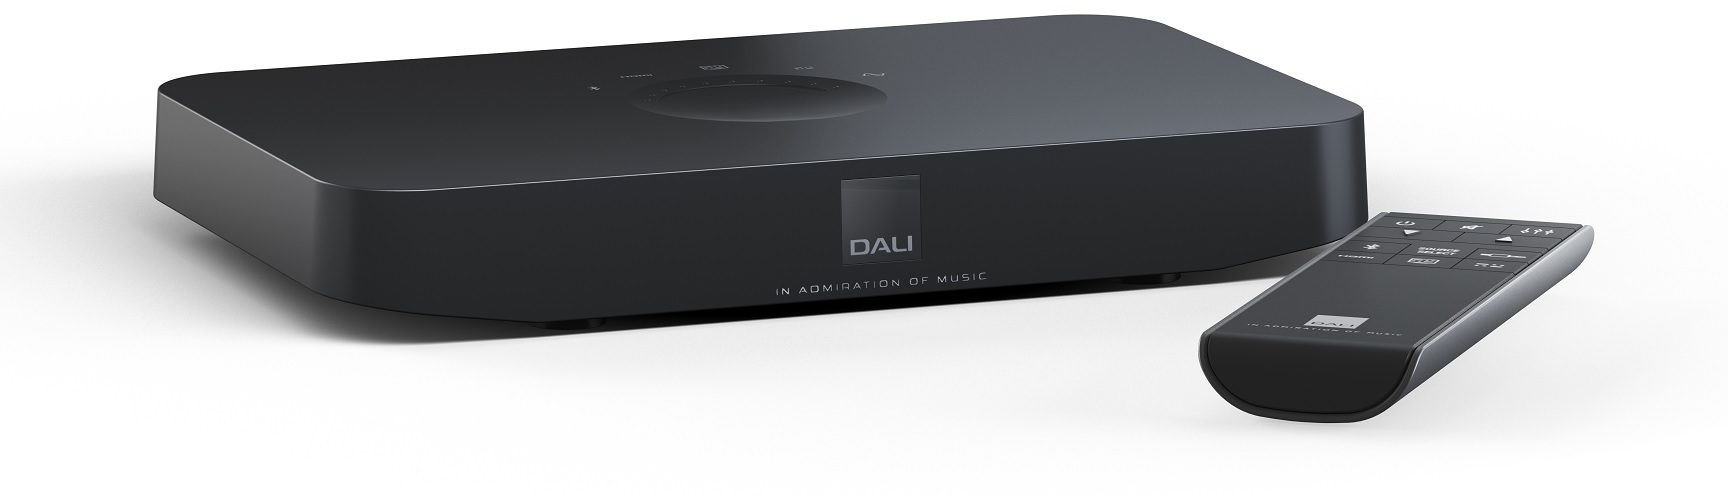 Dali Sound Hub Compact - Speaker accessoire